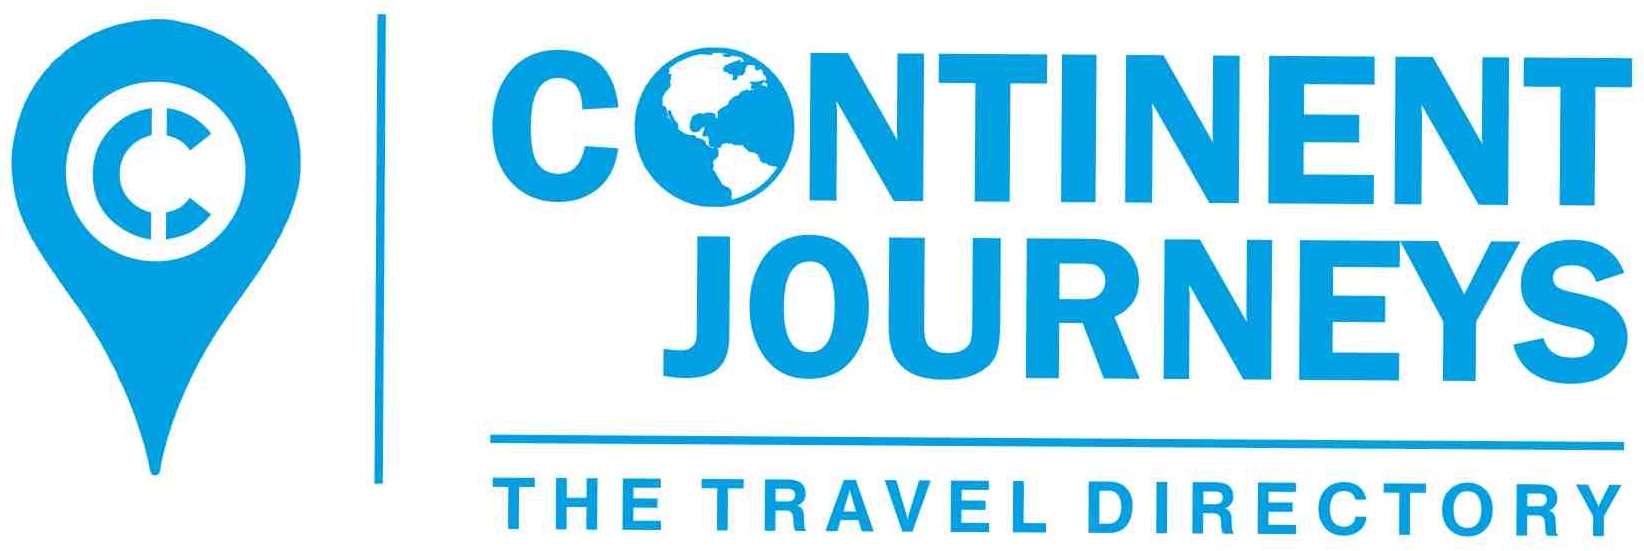 Continent Journeys